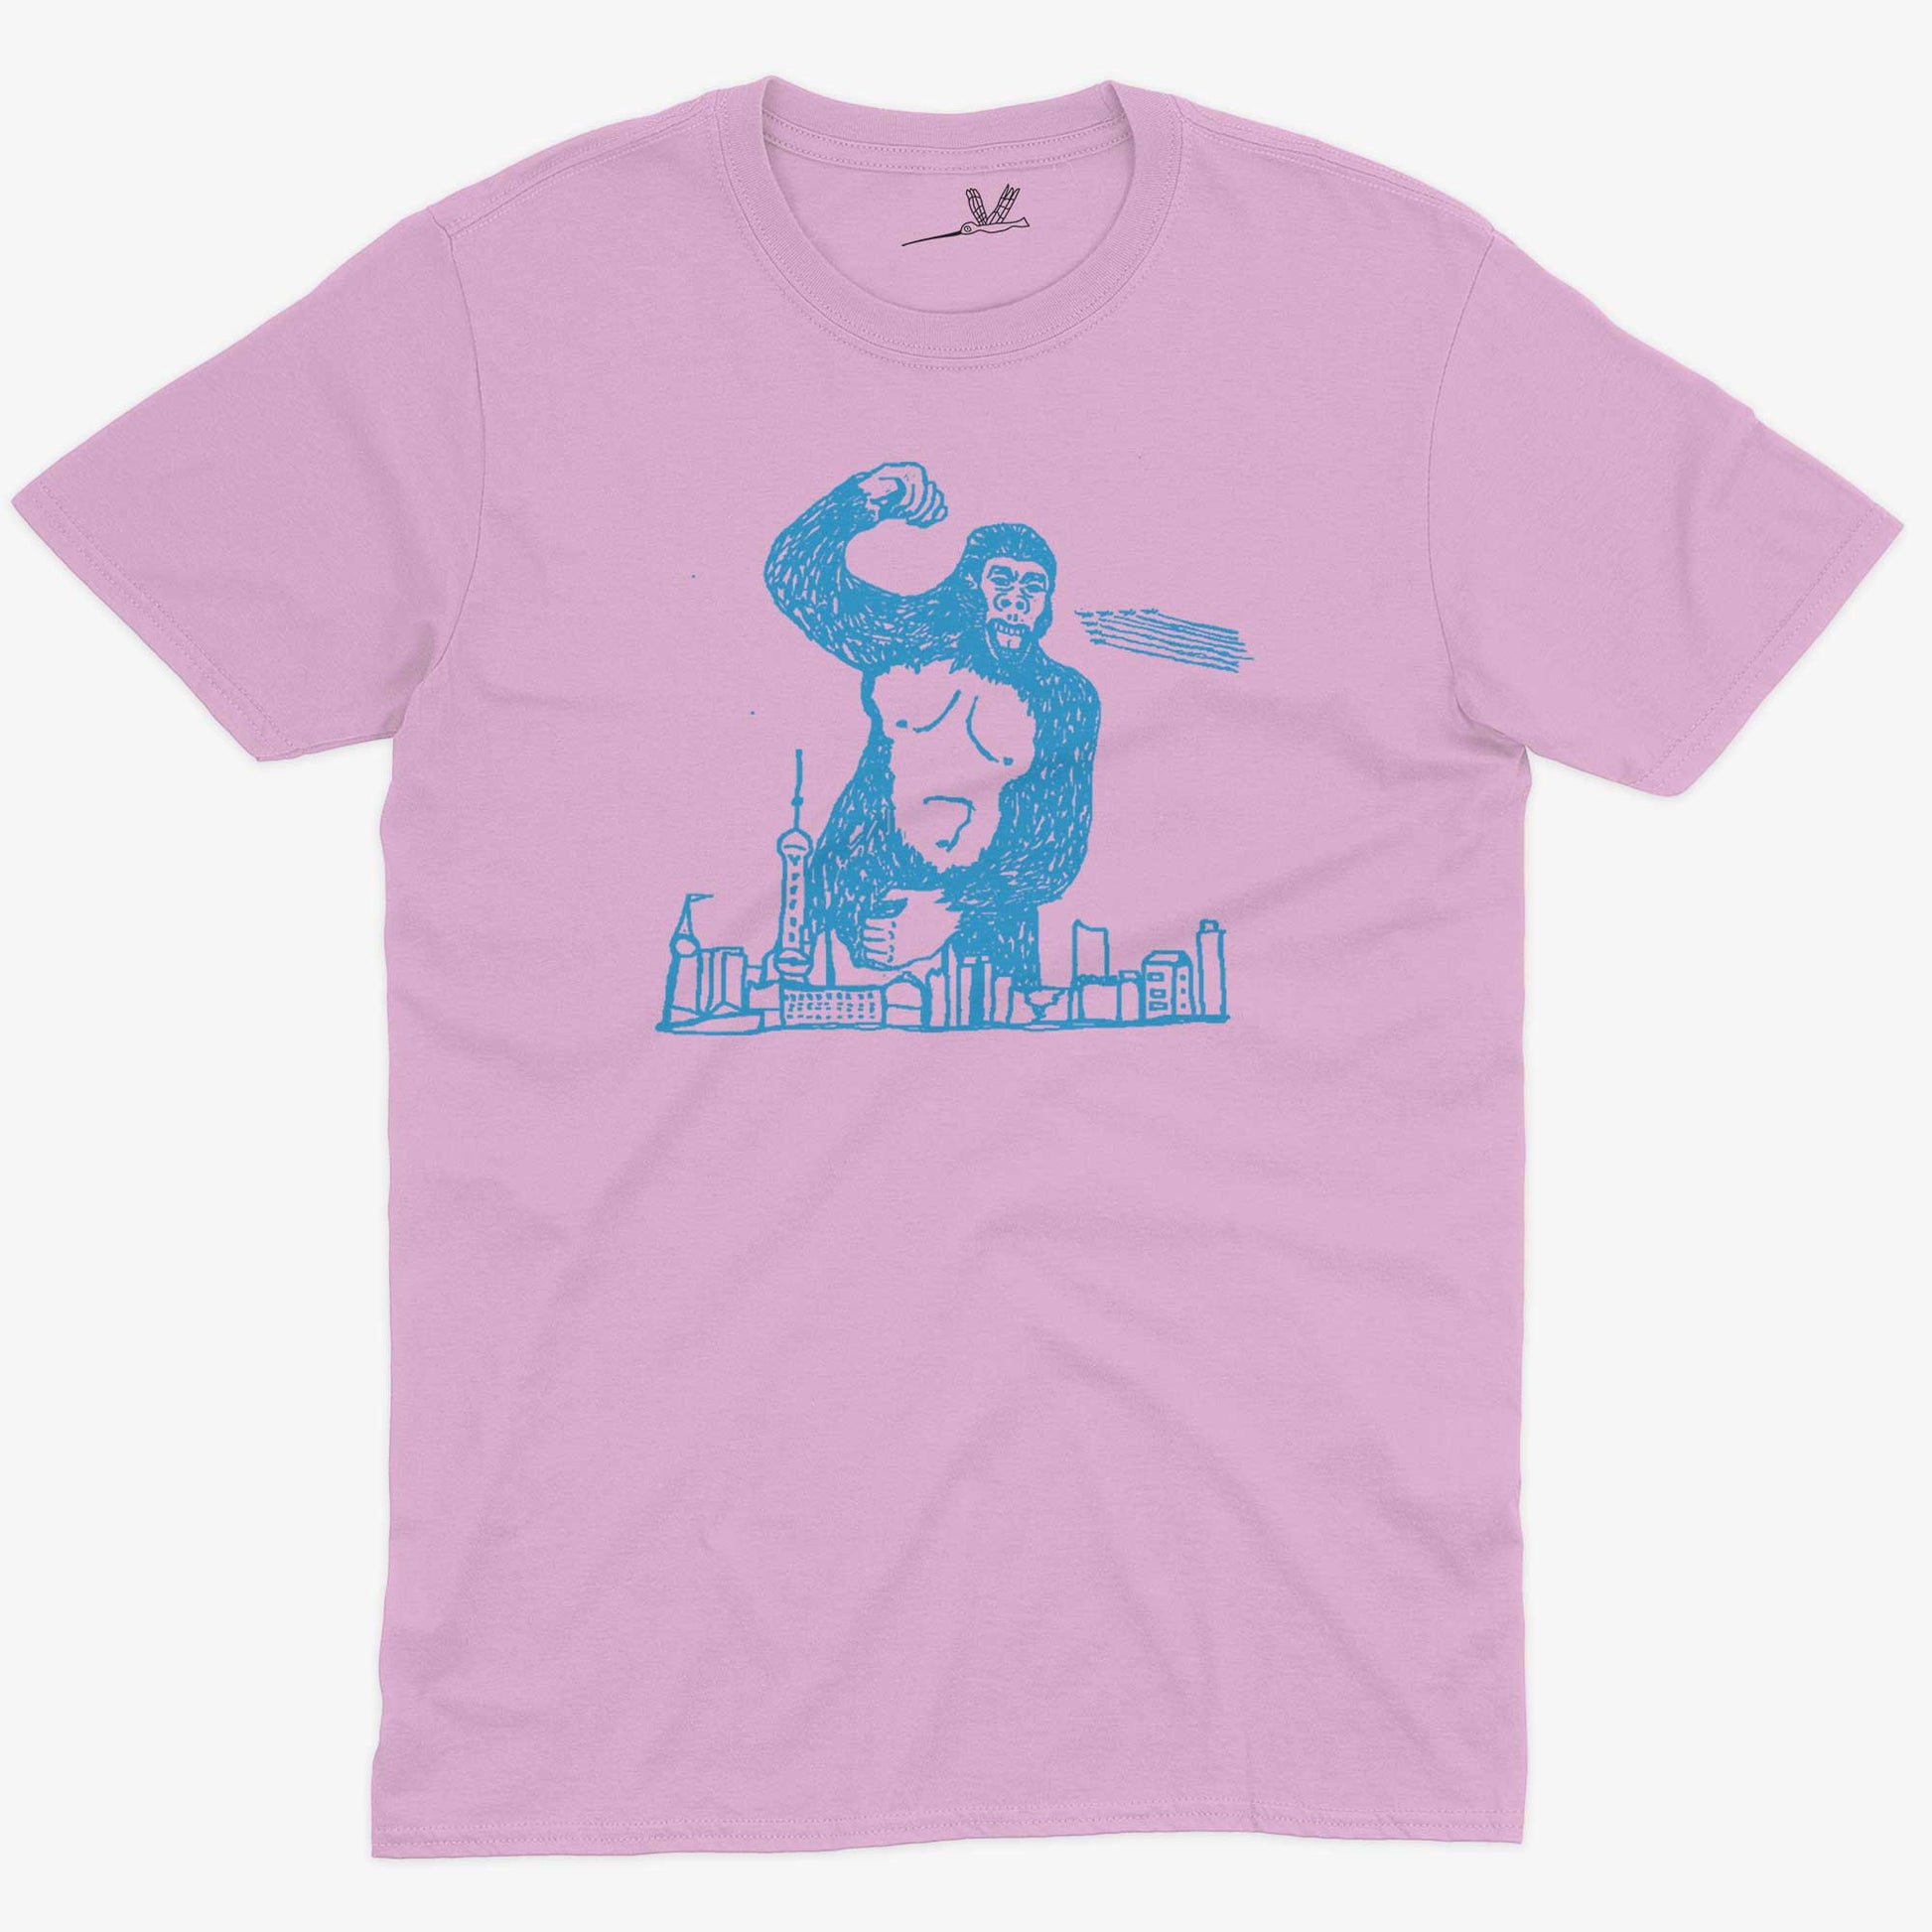 Giant Gorilla Drawing Unisex Or Women's Cotton T-shirt-Pink-Unisex